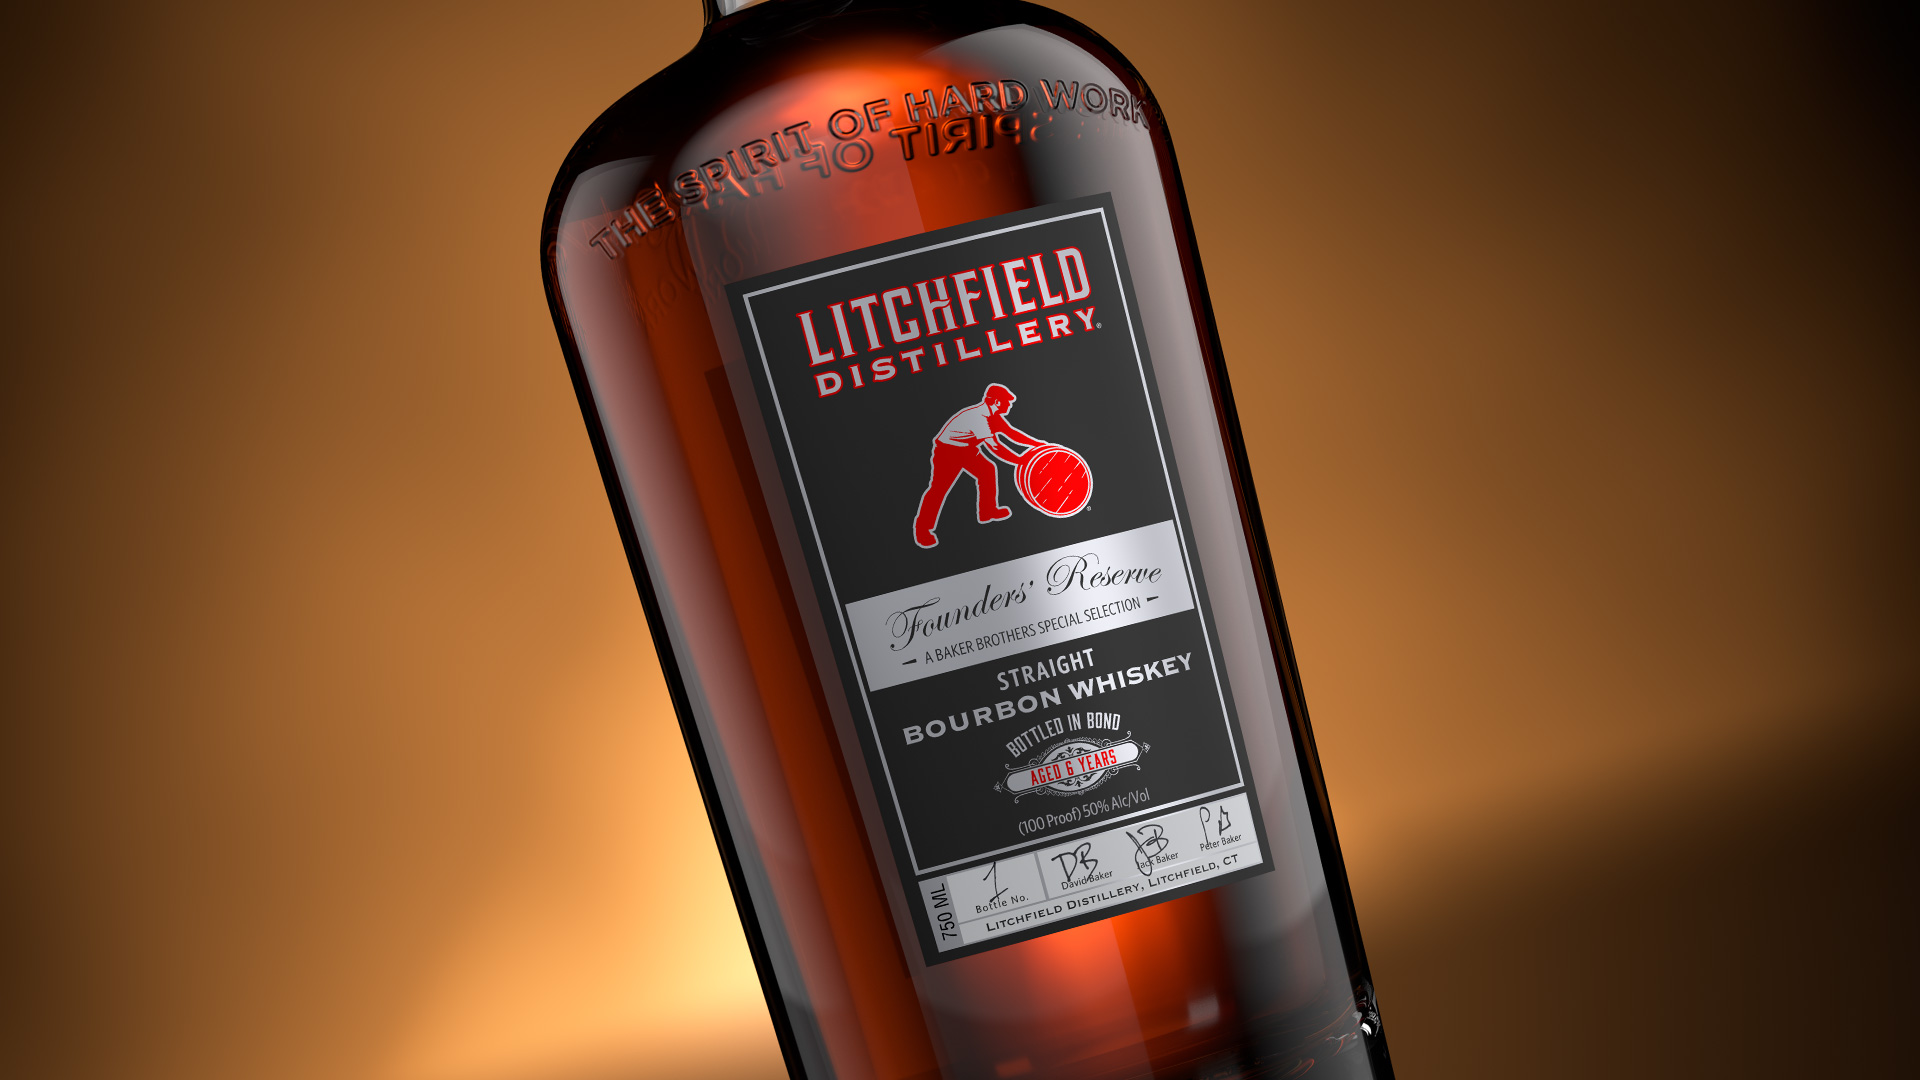 Litchfield Distillery Bottled-in-Bond Bourbon Whiskey